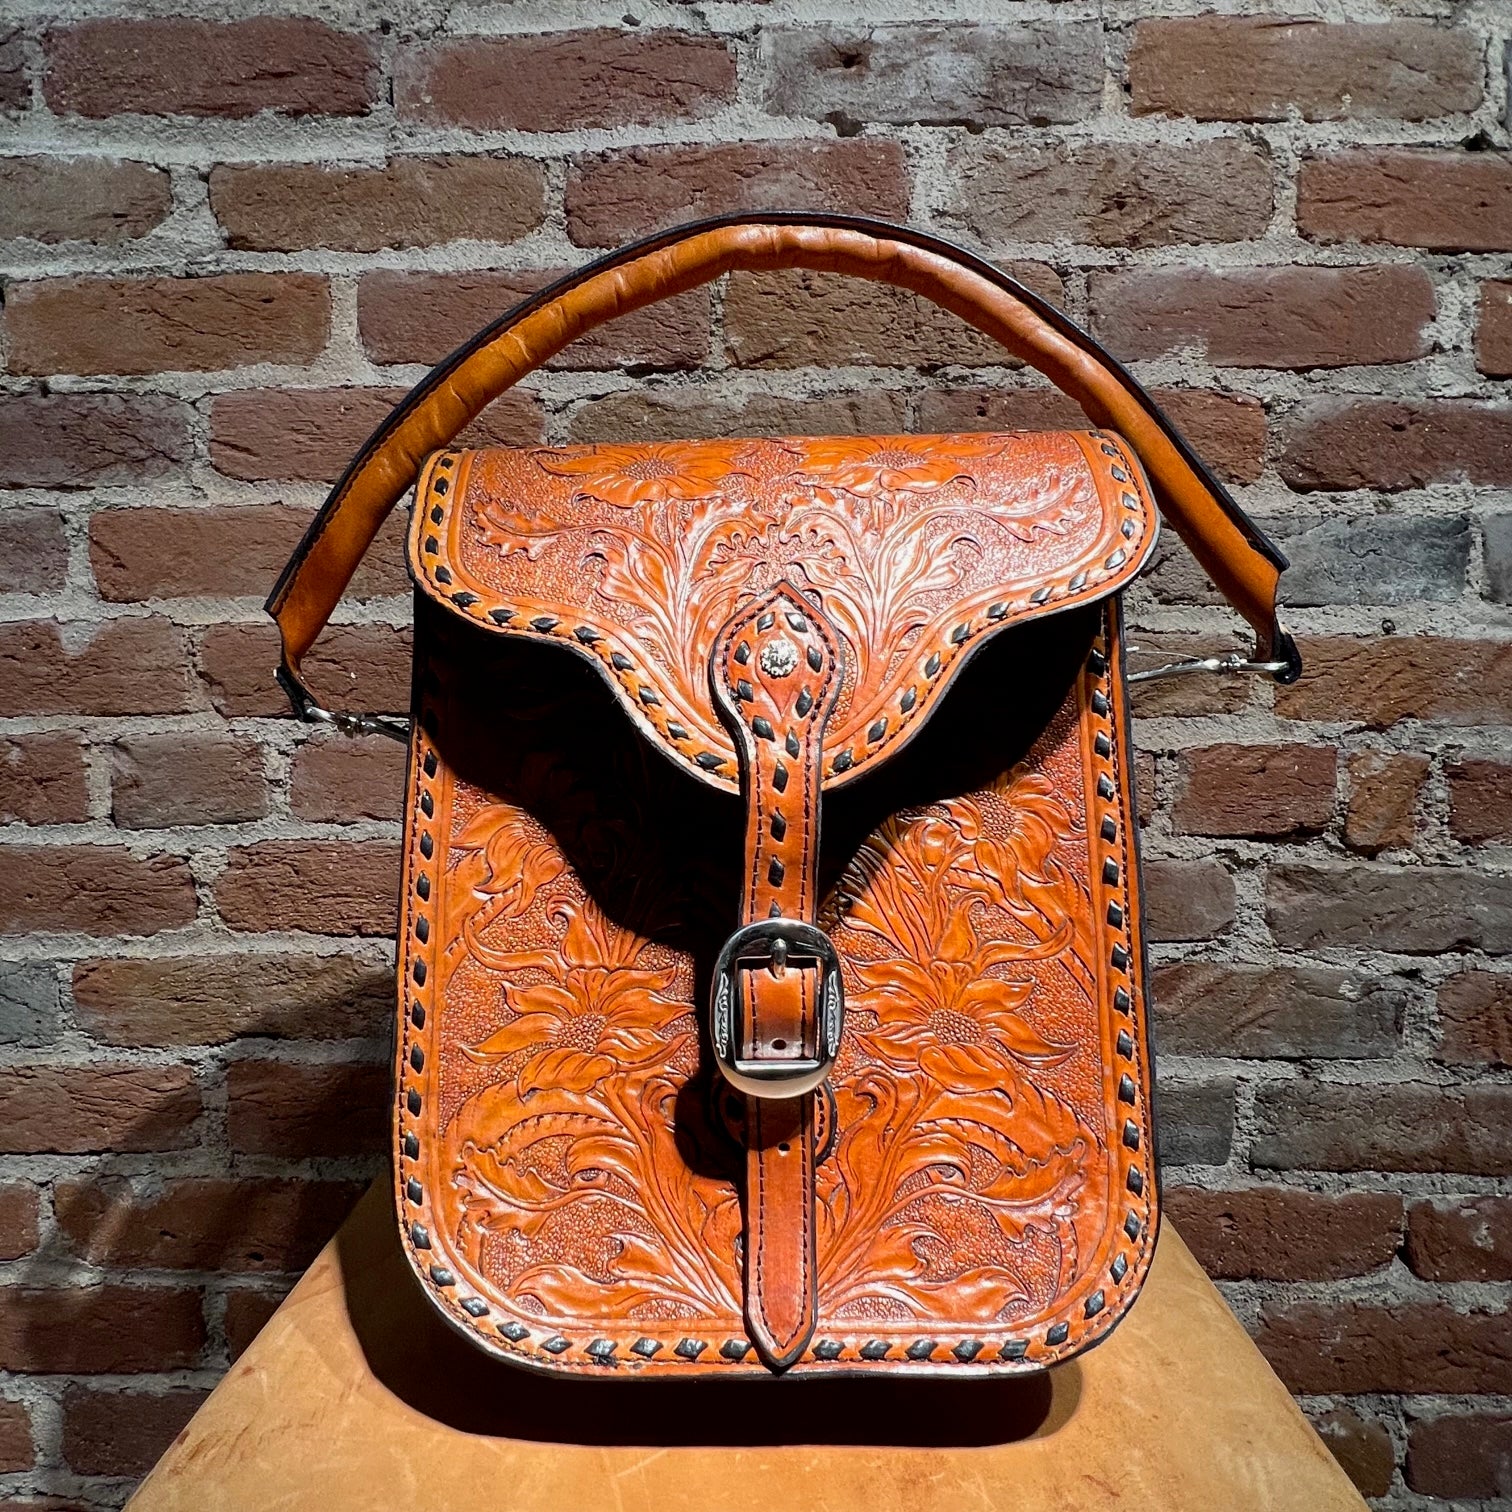 Horse Pattern Saddle Bag